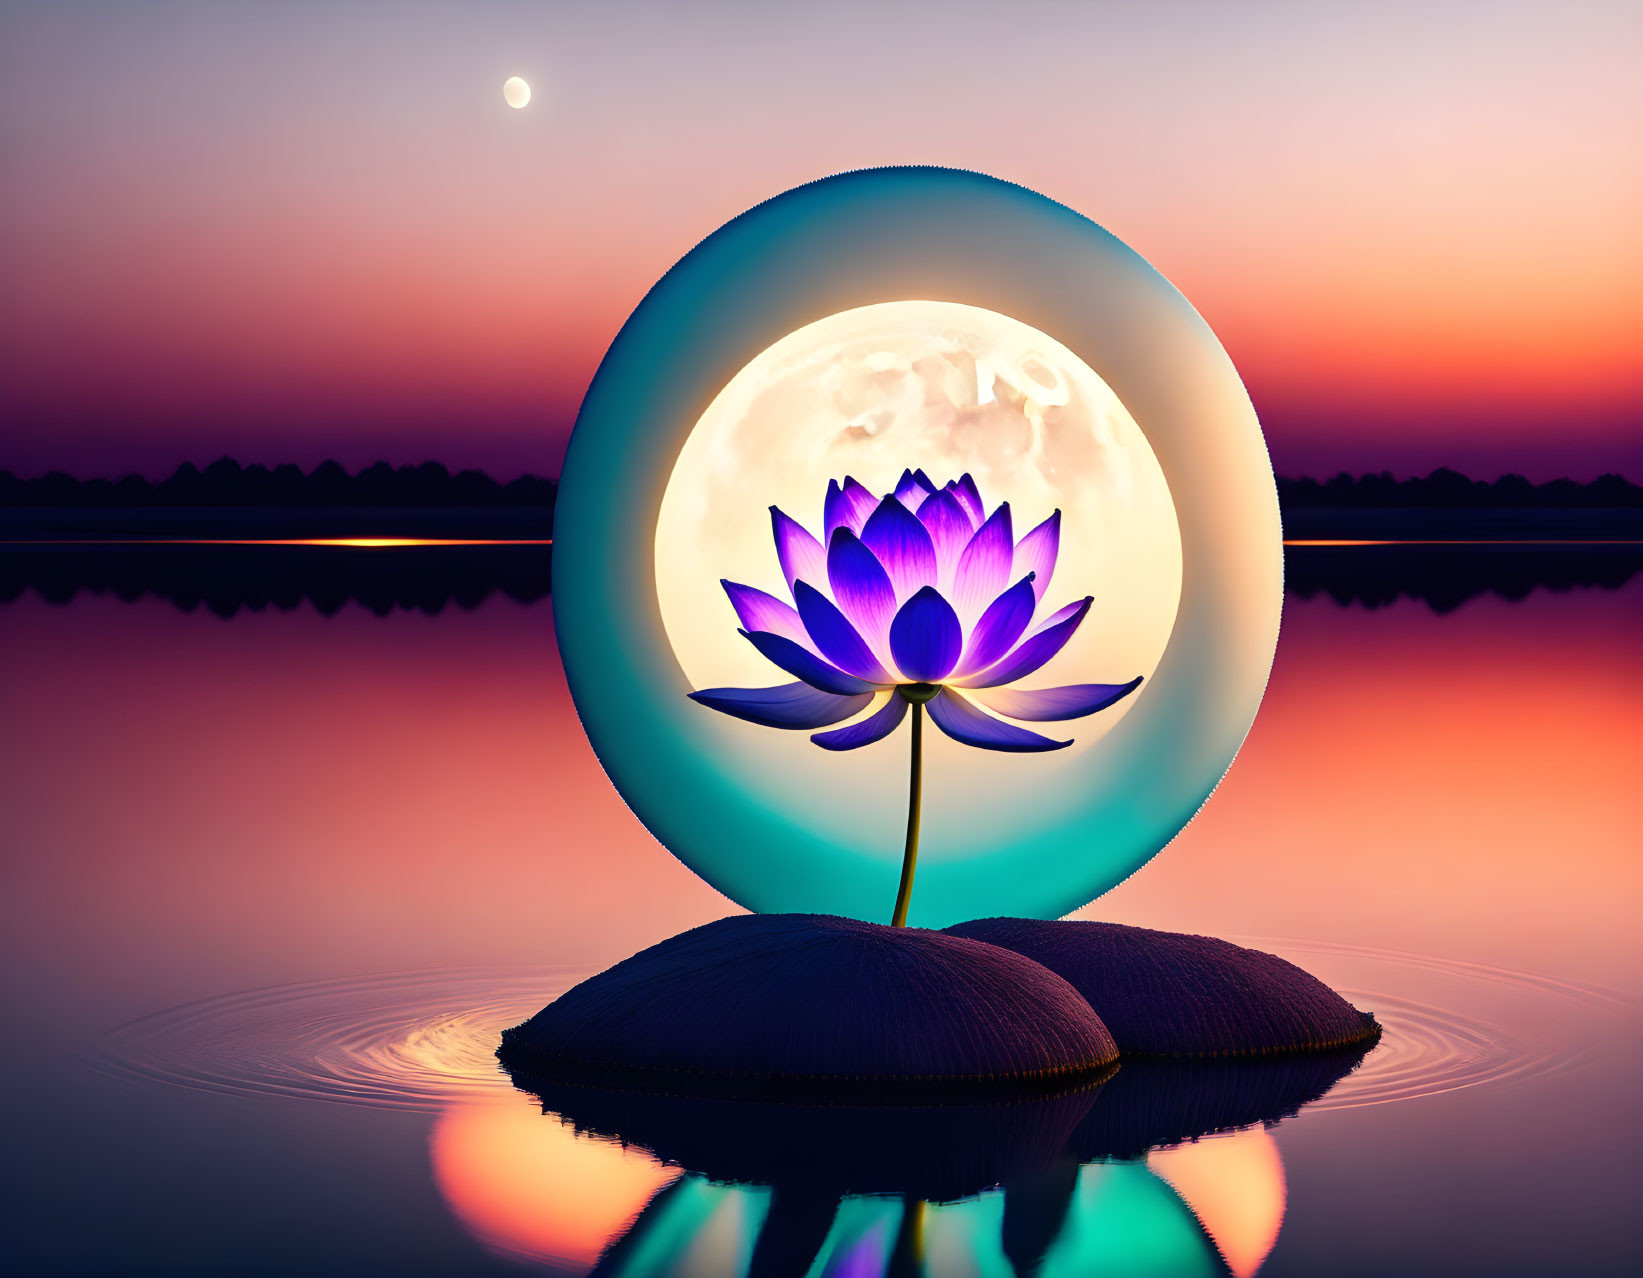 Purple lotus flower emerging from stones on water under a surreal moonlit sky